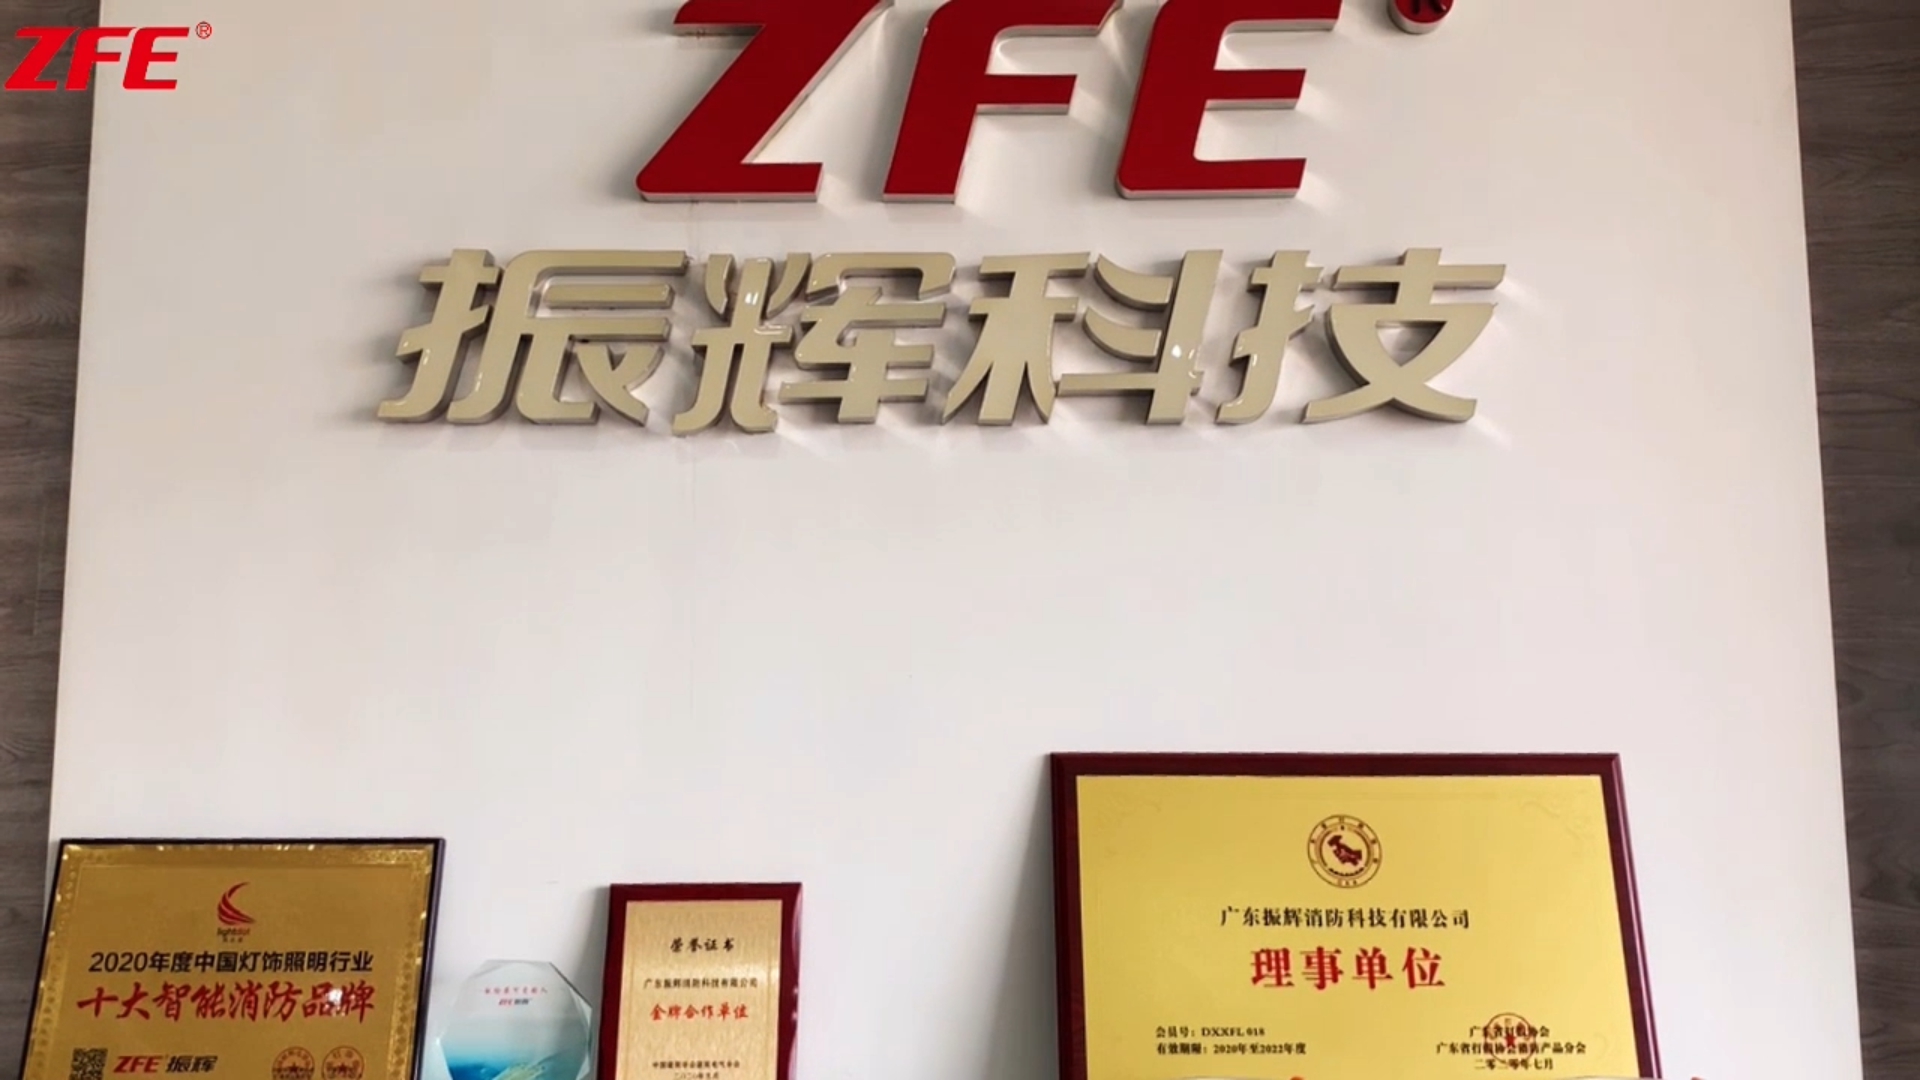 Industry associations come to visit Guangdong Zhenhui Fire Technology Co., Ltd.